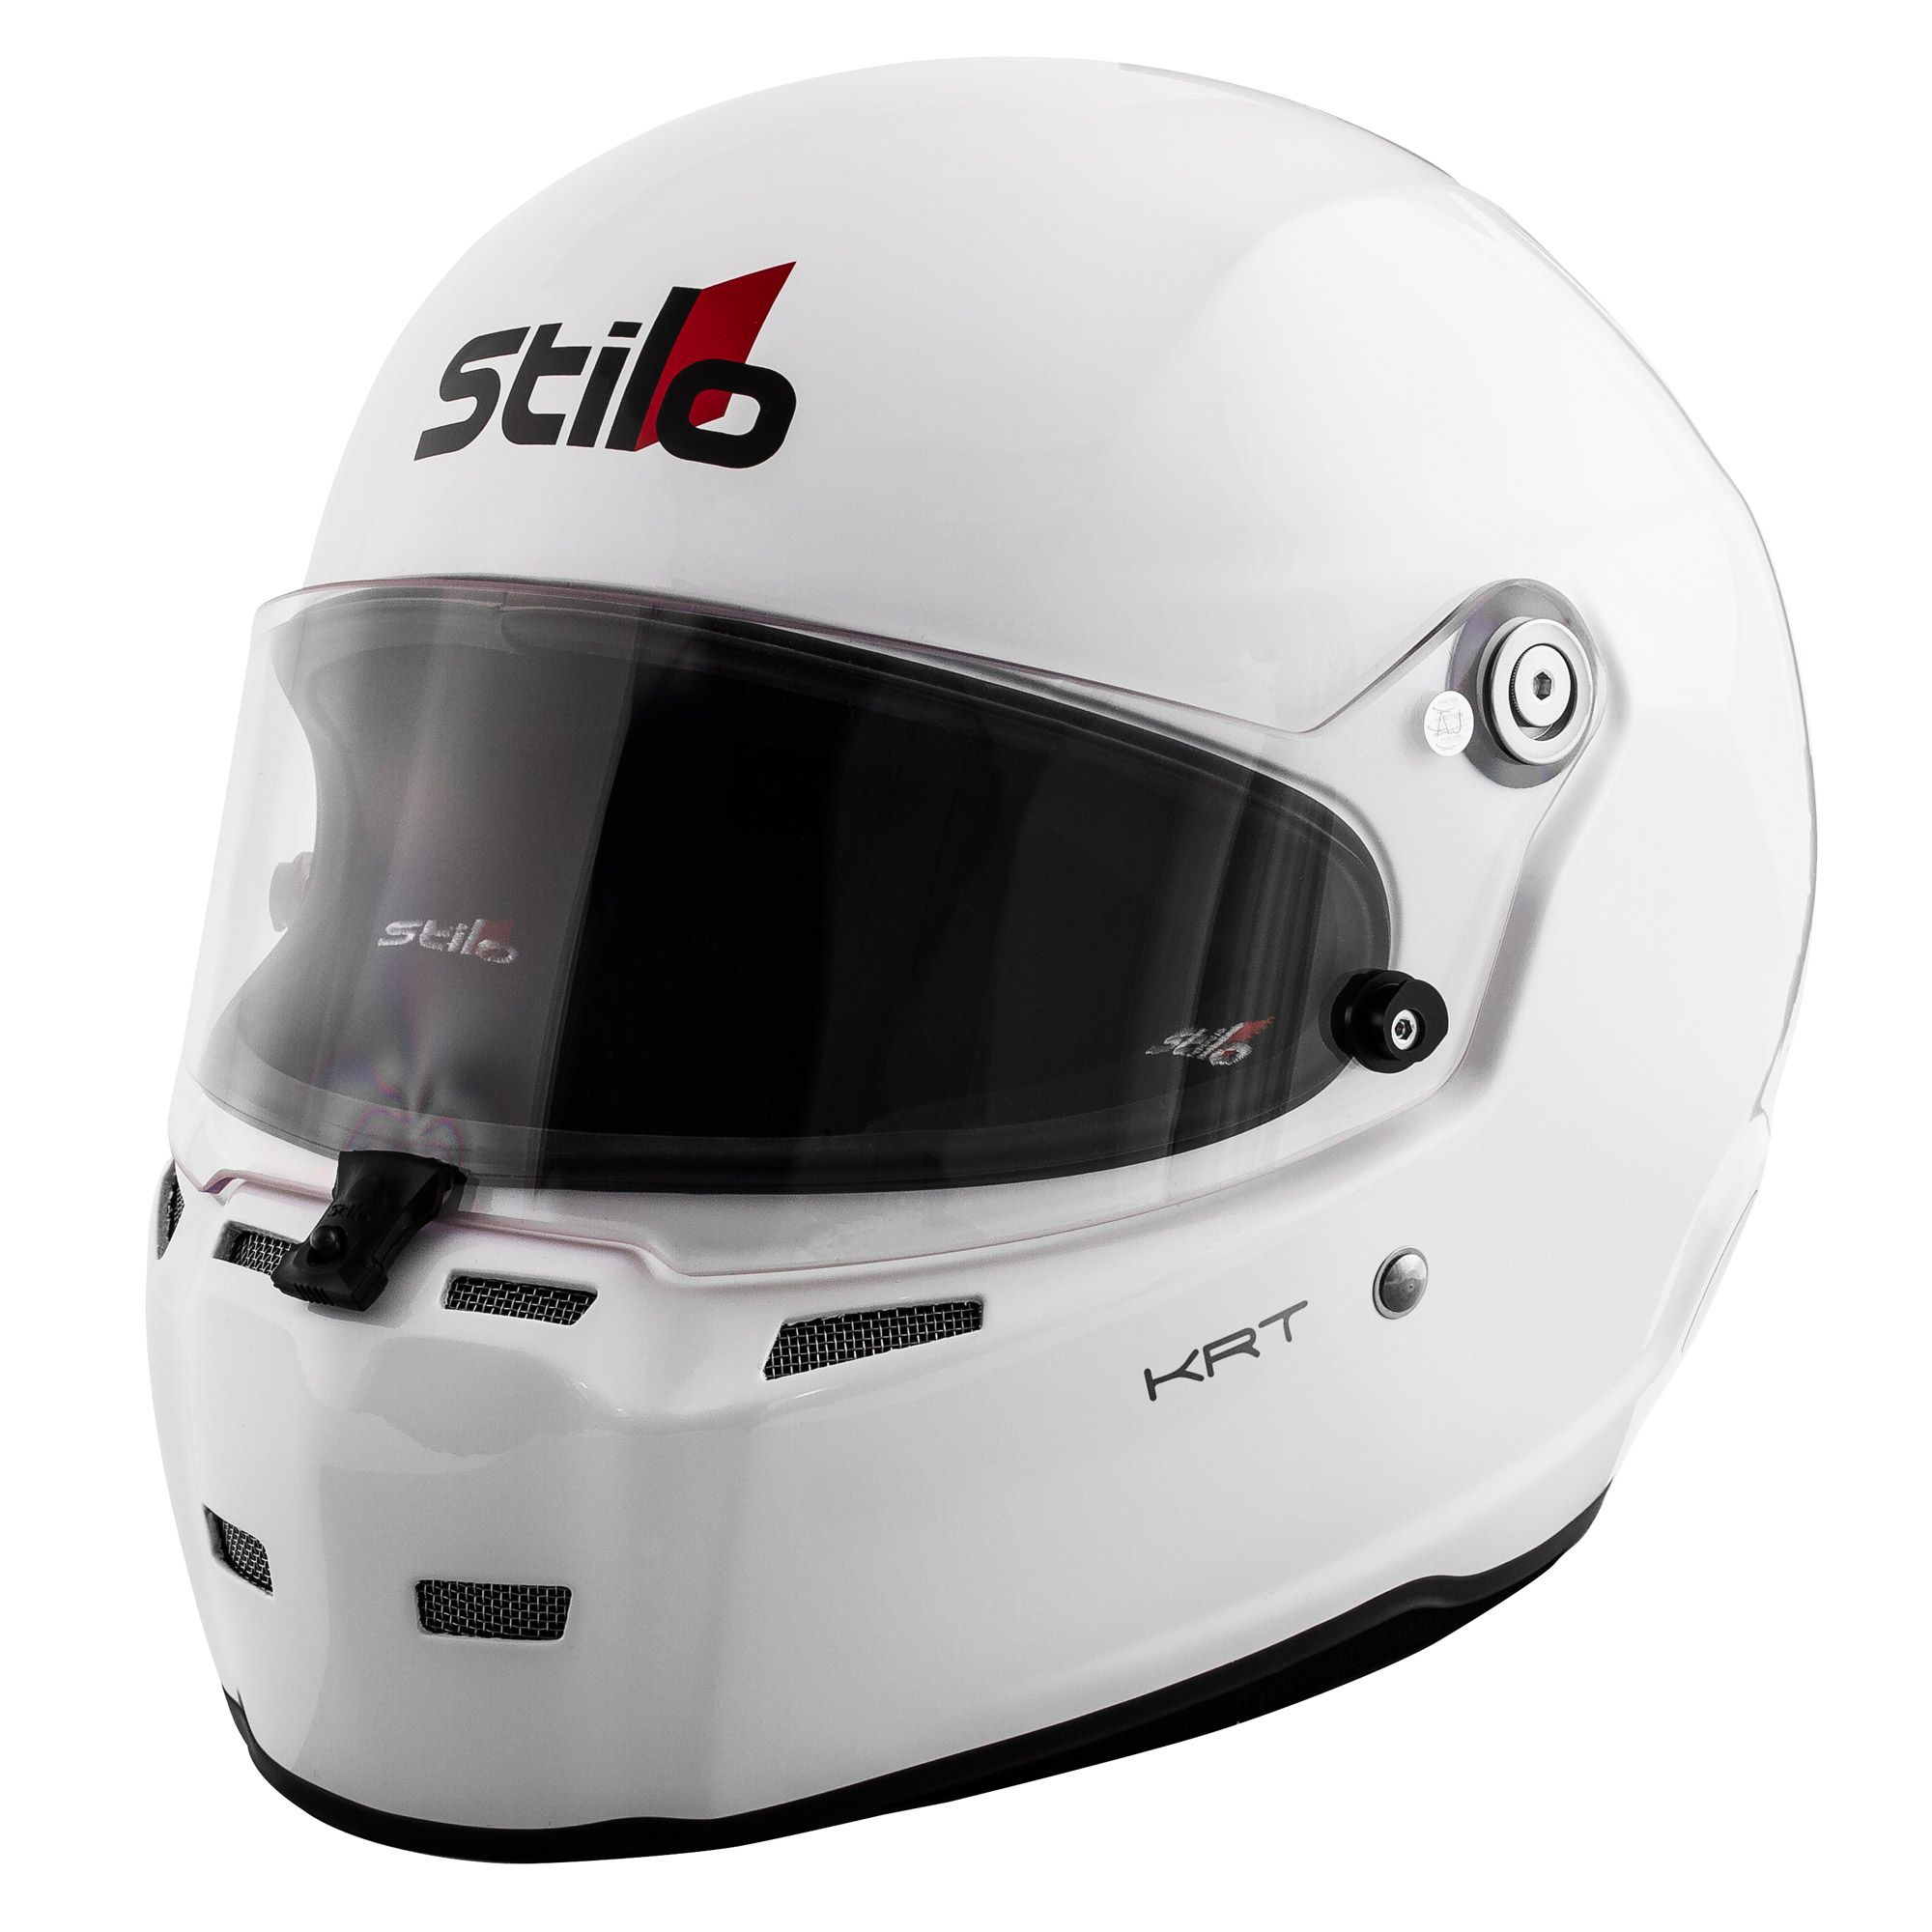 Audi Pin Helmet Racing Motor Sports Green Dimensions 0 27/32x0 21/32in 